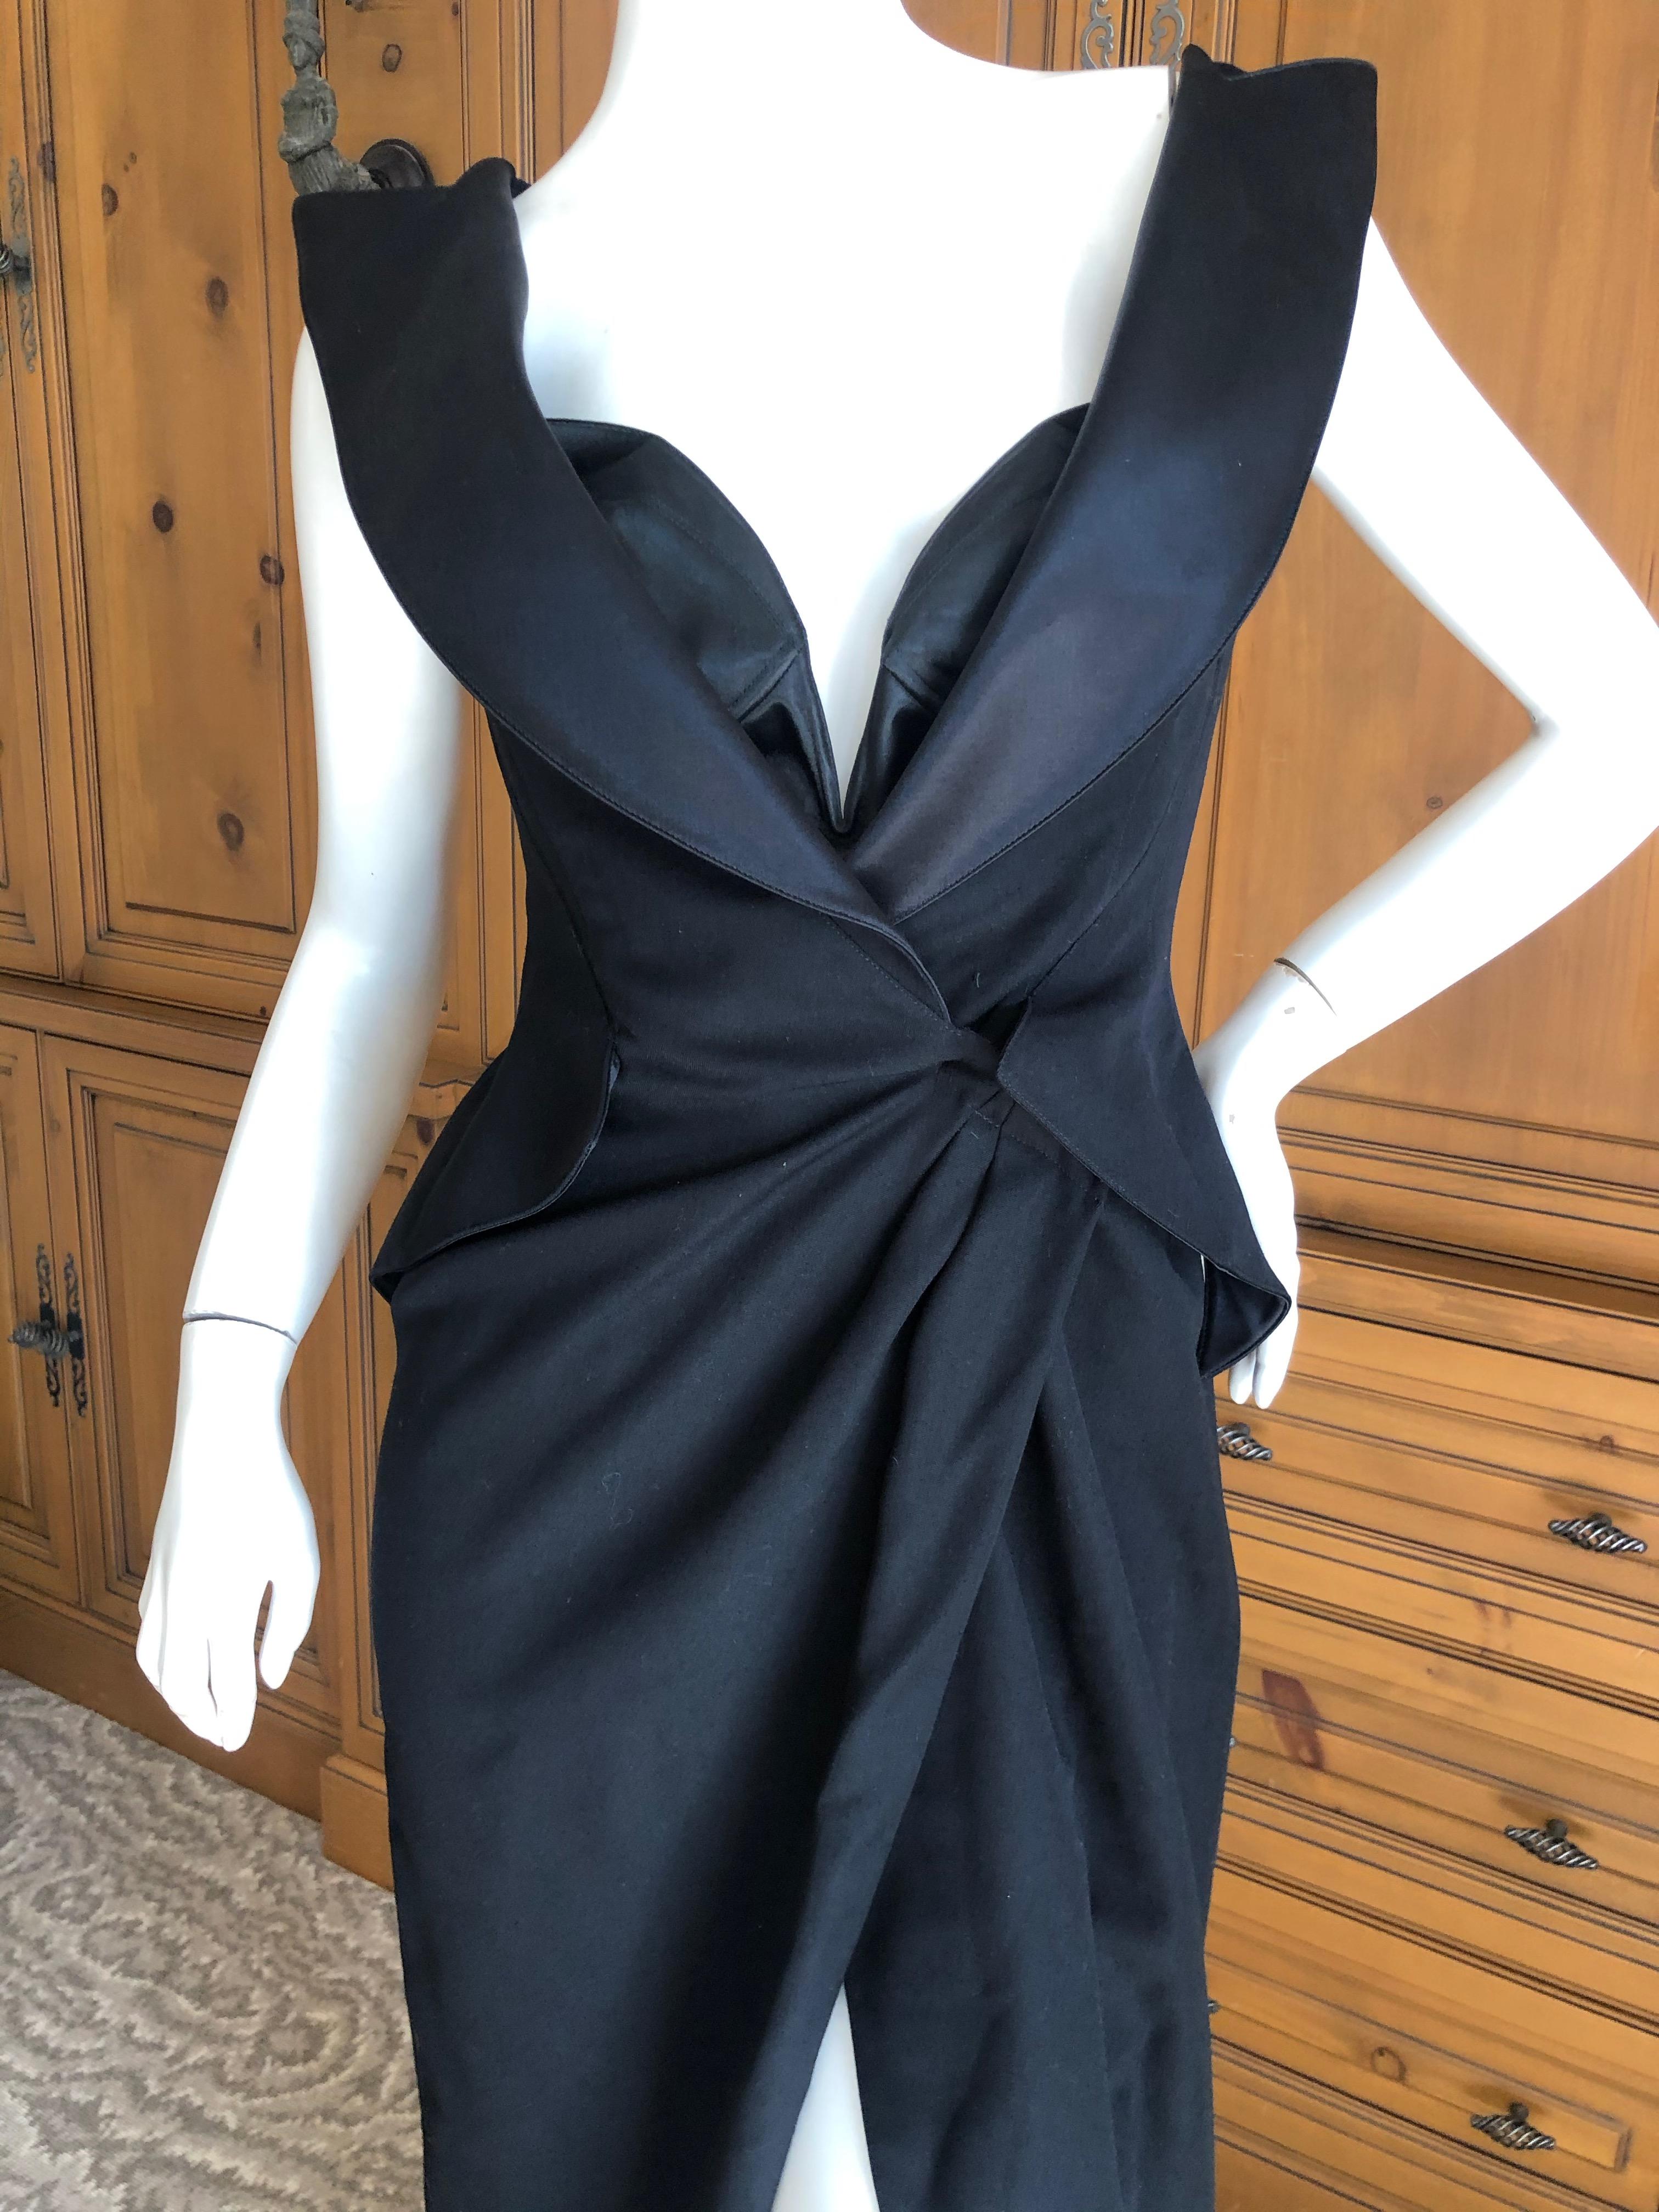 Women's Thierry Mugler Couture Vintage Black Peak Lapel Tuxedo Dress w Separate Corset